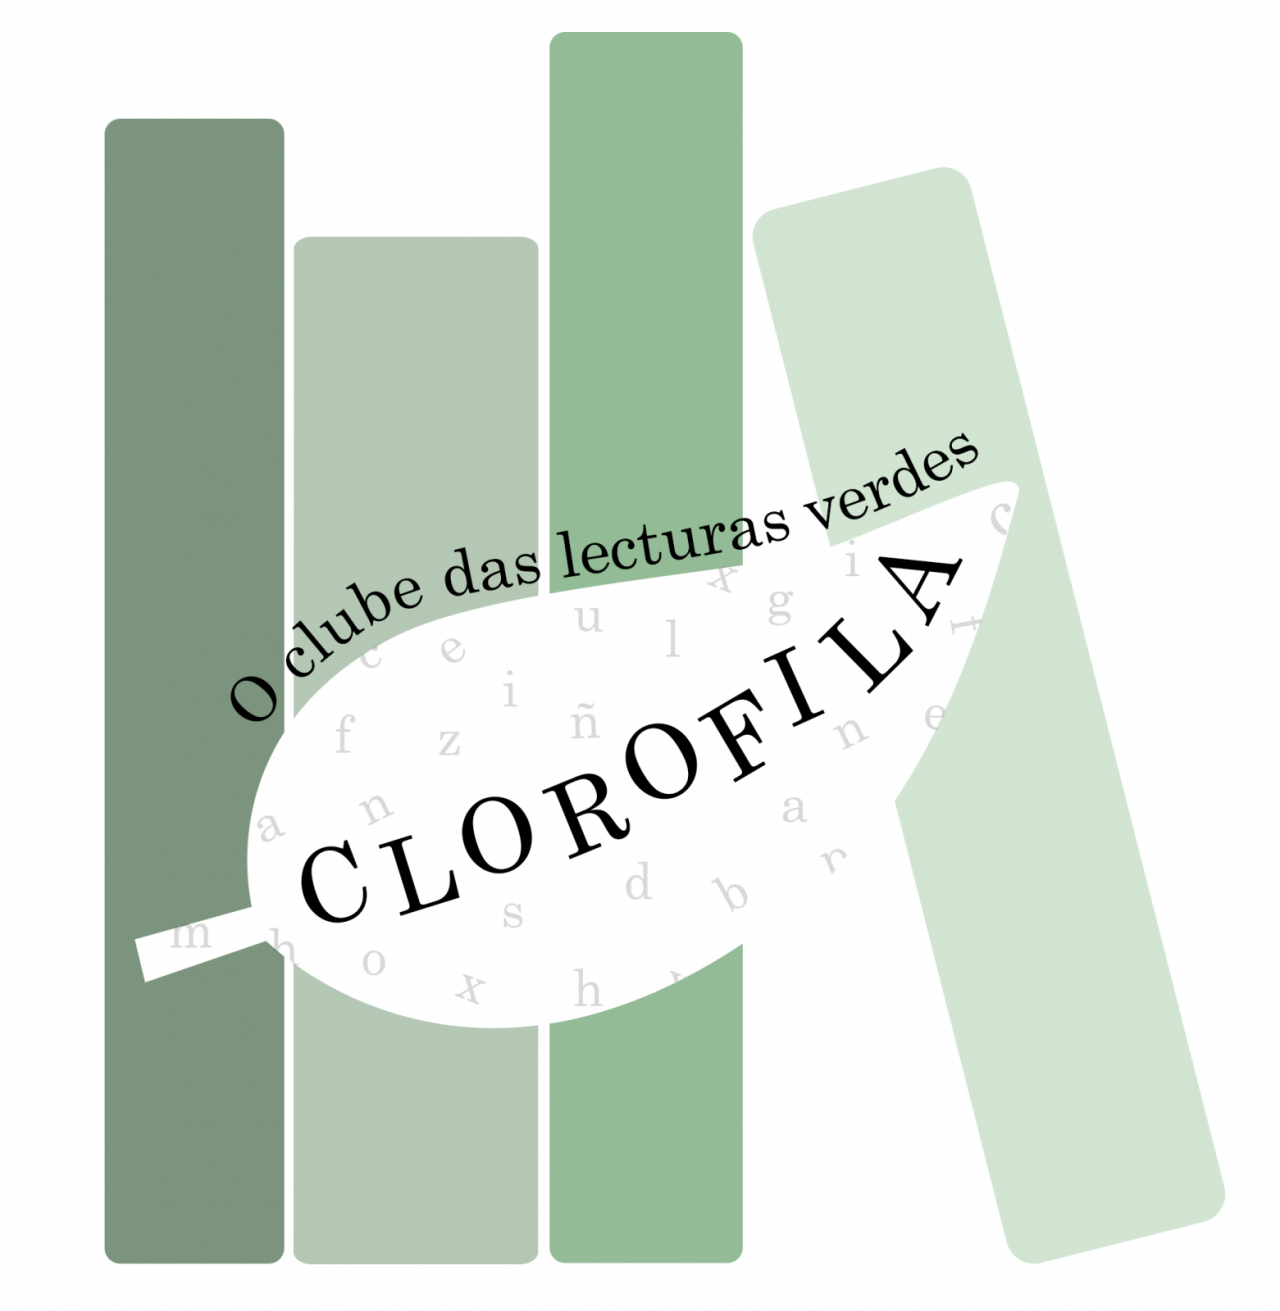 Clorofila. Centro de Documentación Domingo Quiroga. CEIDA-Galicia